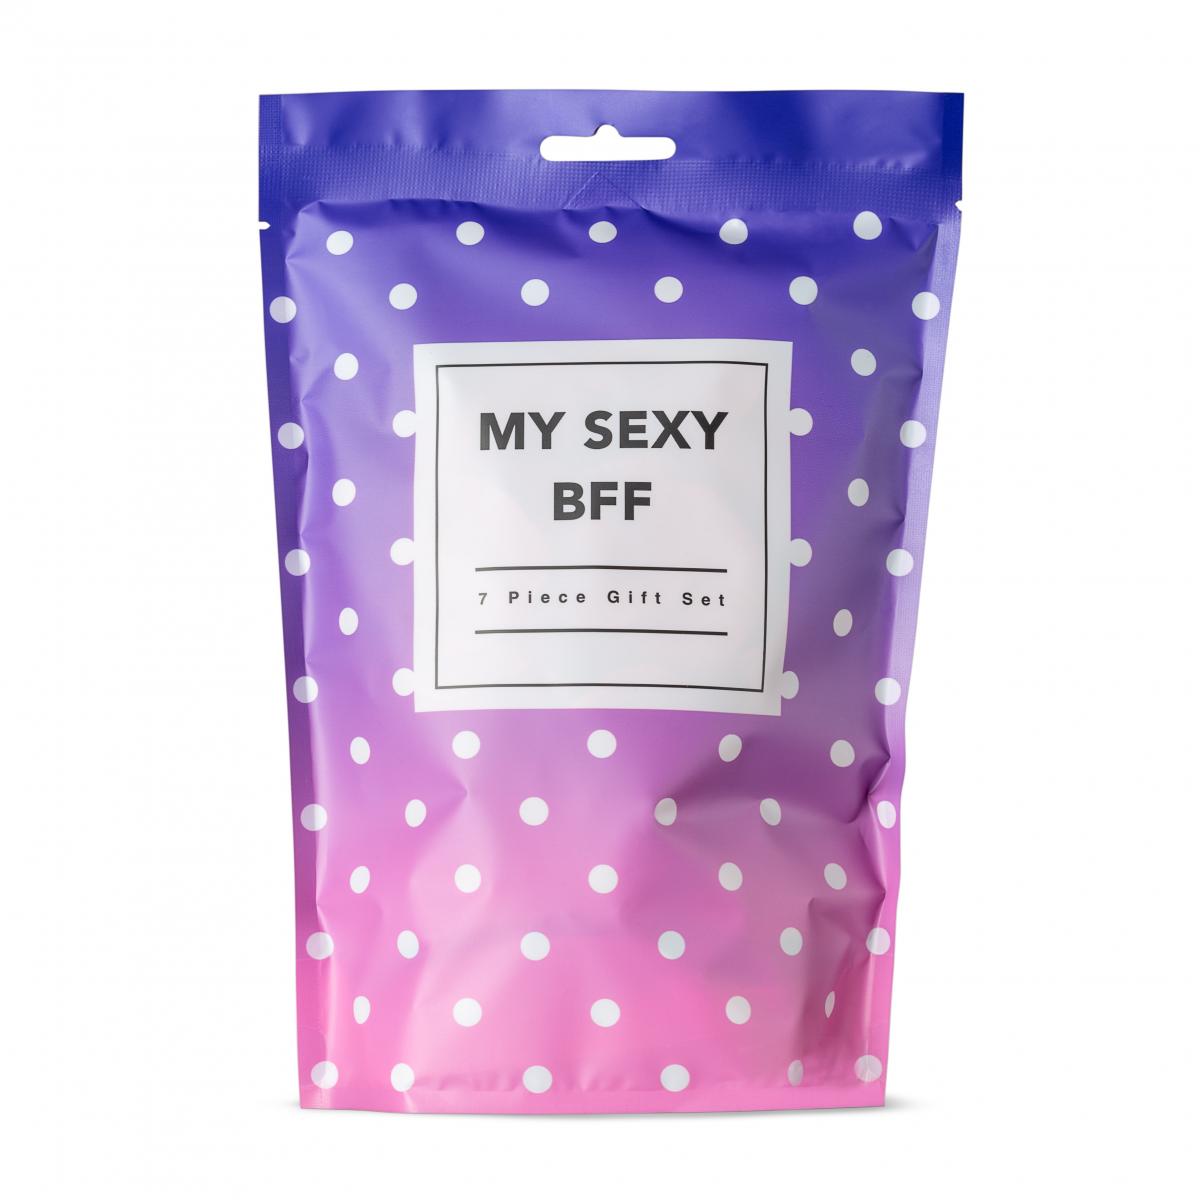 Loveboxxx - My Sexy BFF Gift Set